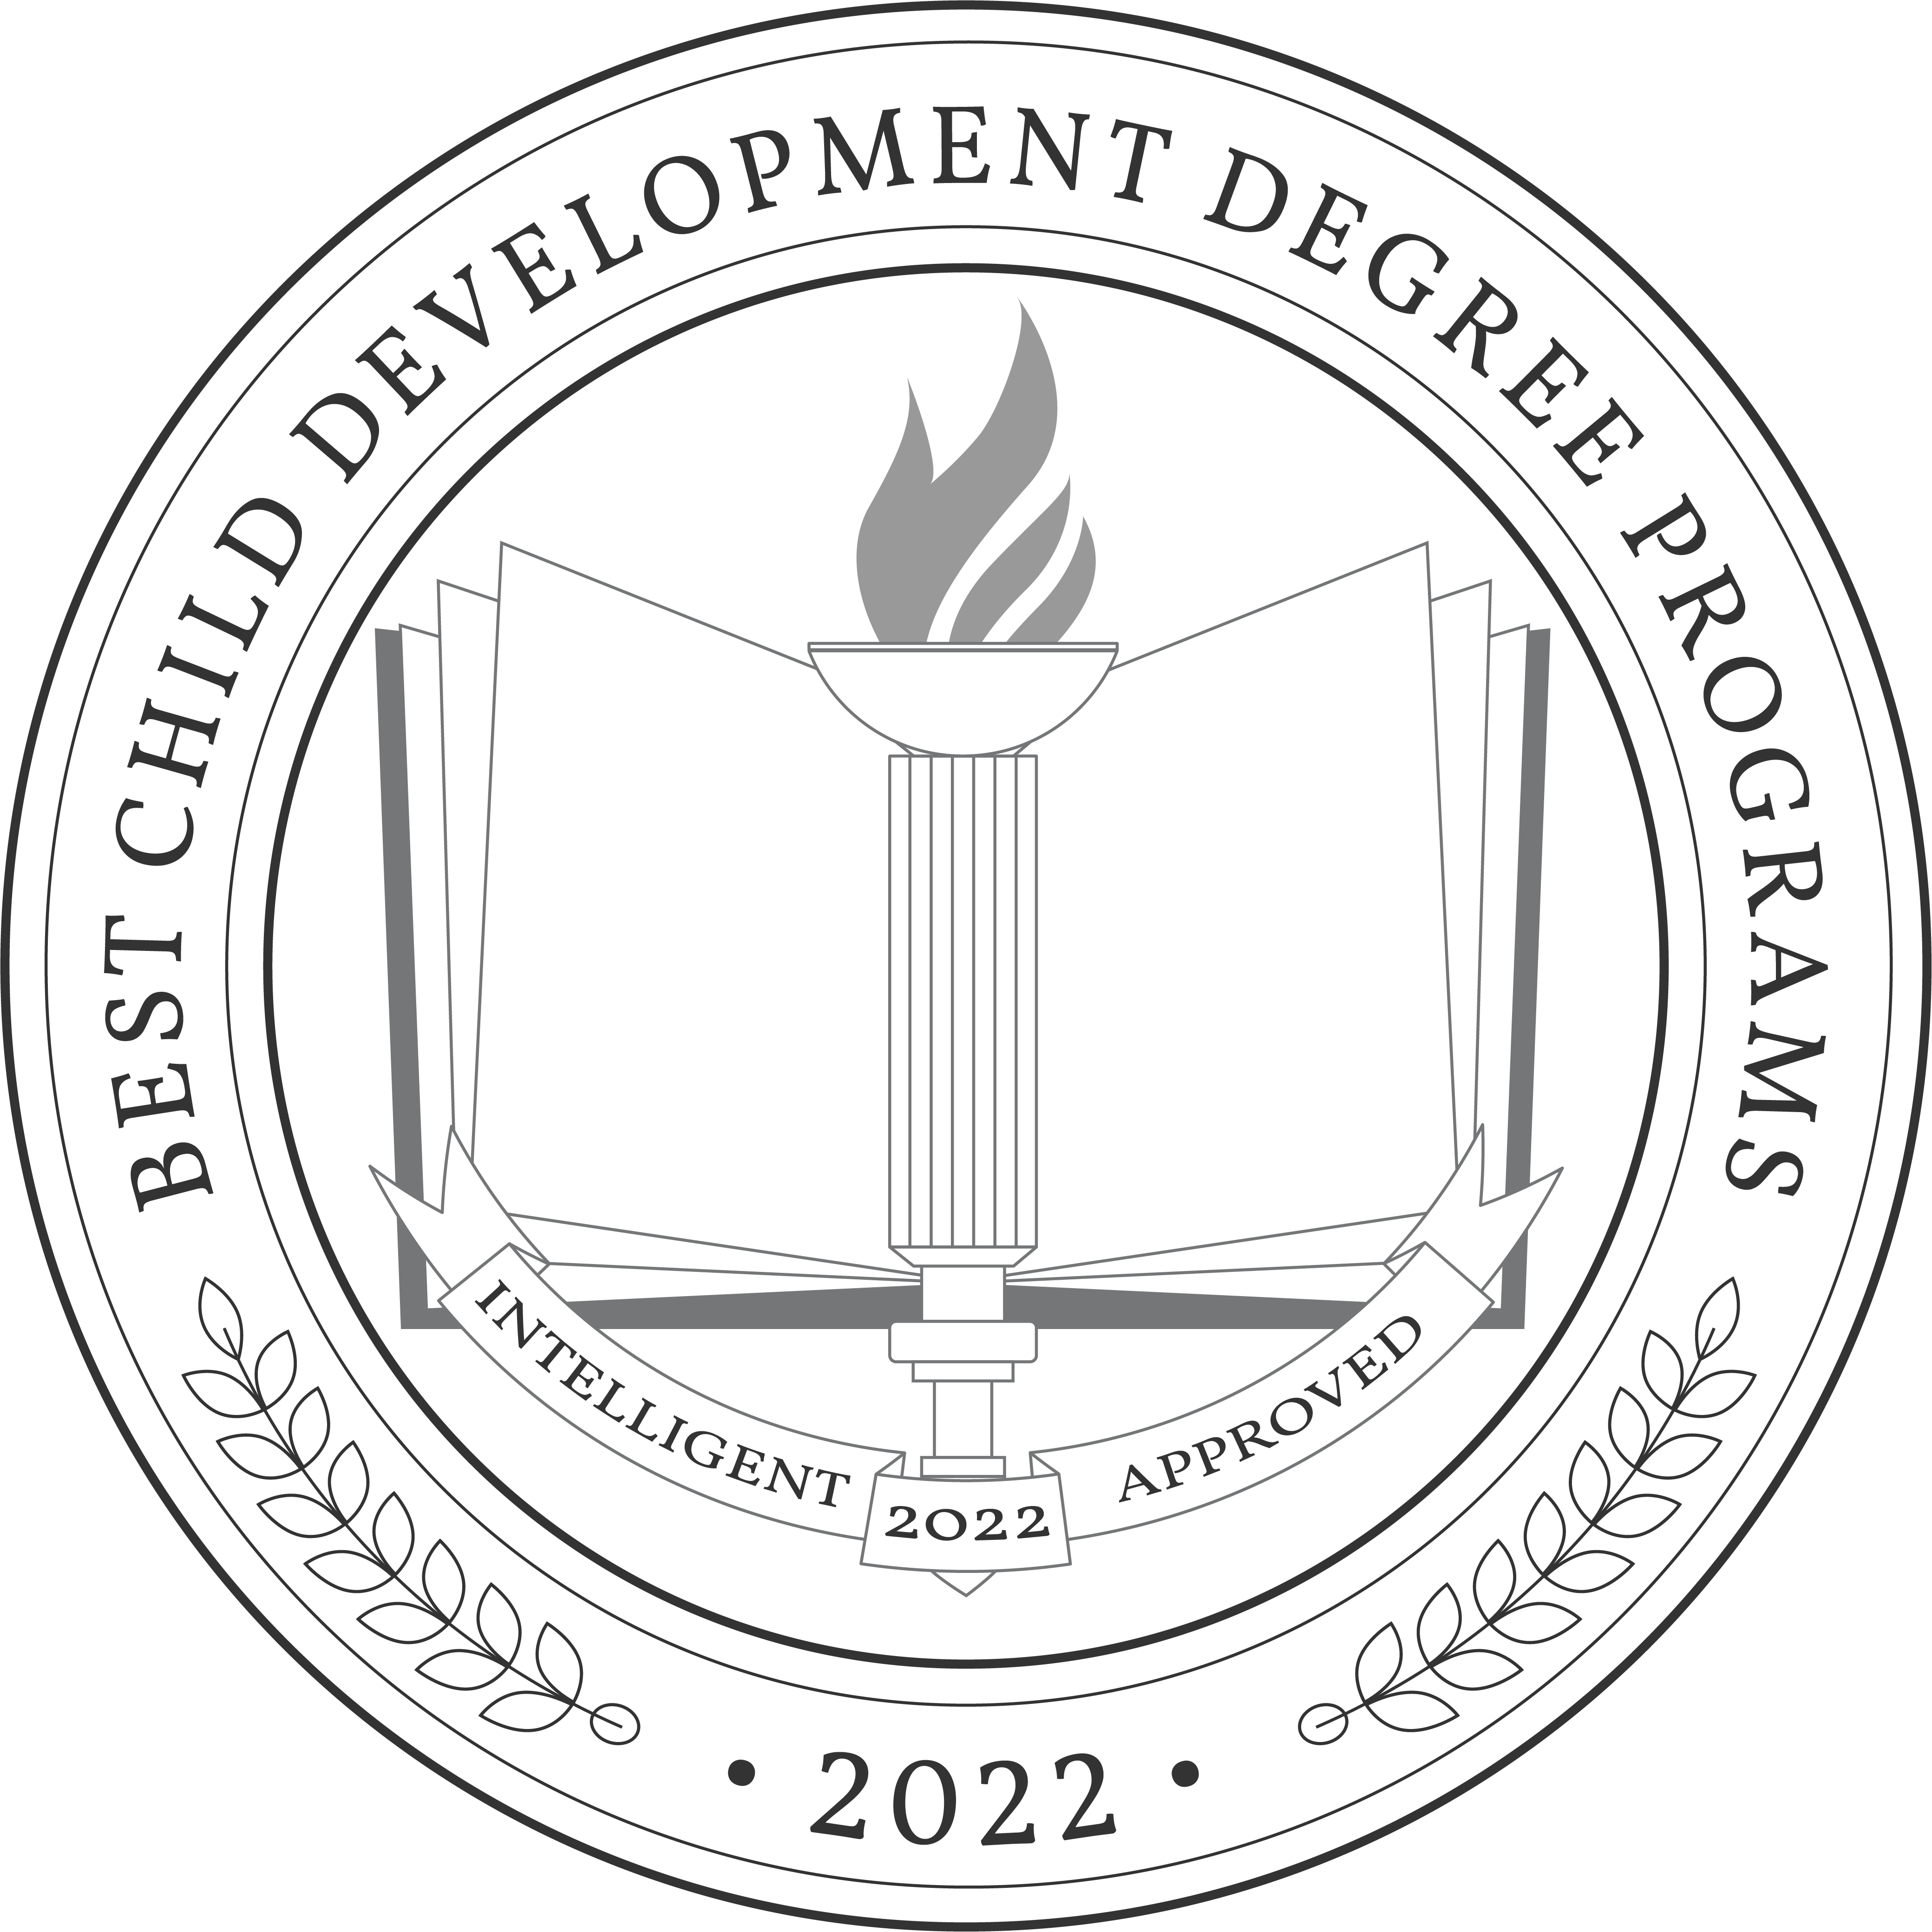 Best-Child-Development-Degree-Programs-Badge.png